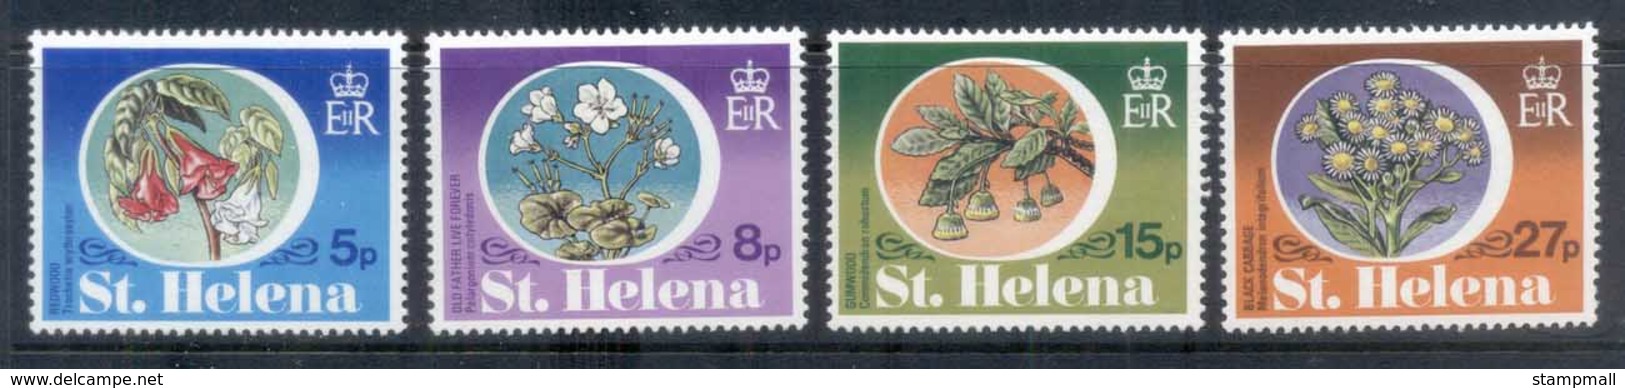 St Helena 1981 Flowers MUH - Saint Helena Island